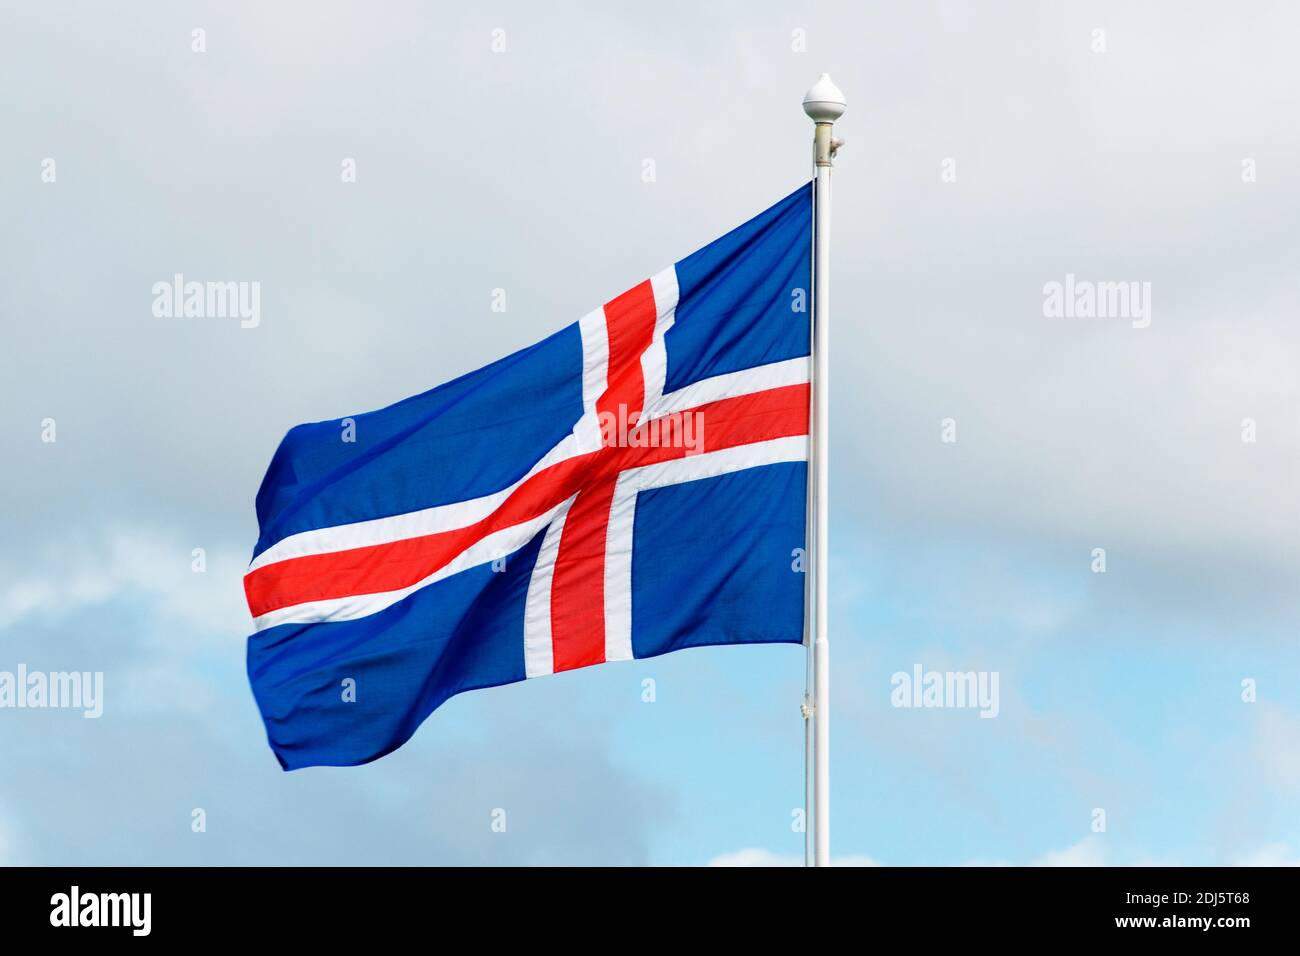 Europa, Isla, Islandia, Fahne, Flagge, Nationalfahne, im flattert Fahnenmast, viento, Foto de stock